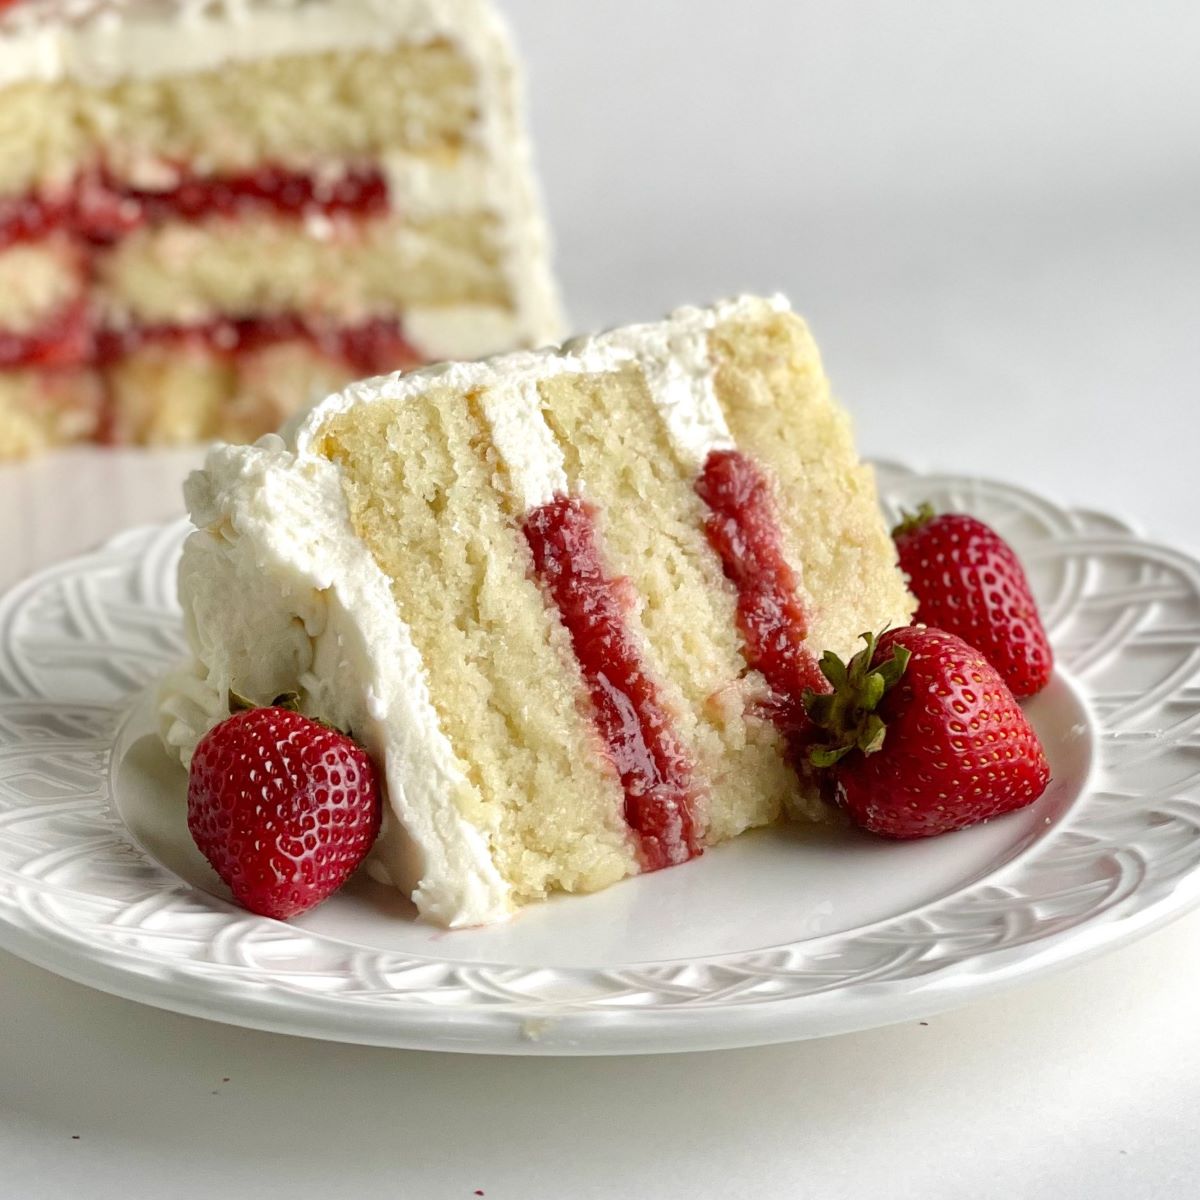 Vanilla Rose Cake - A Classic Twist